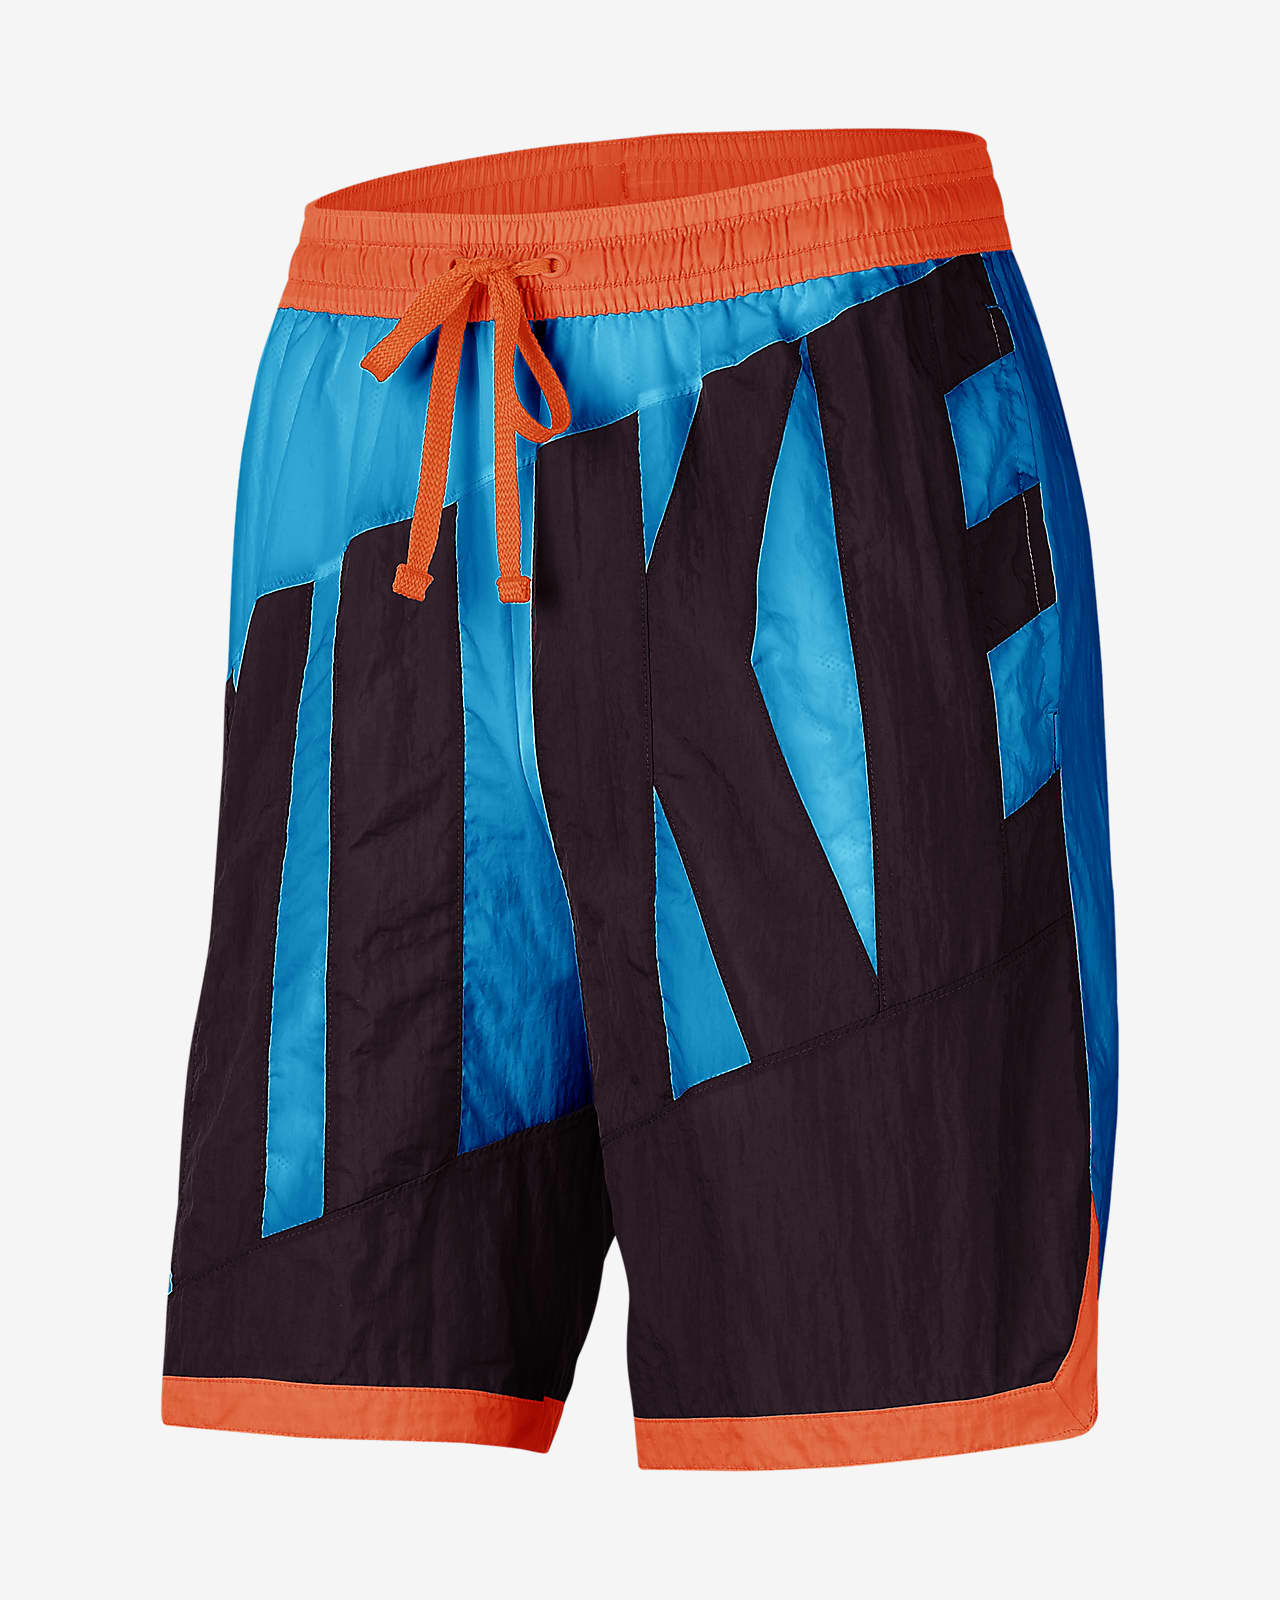 colorful basketball shorts